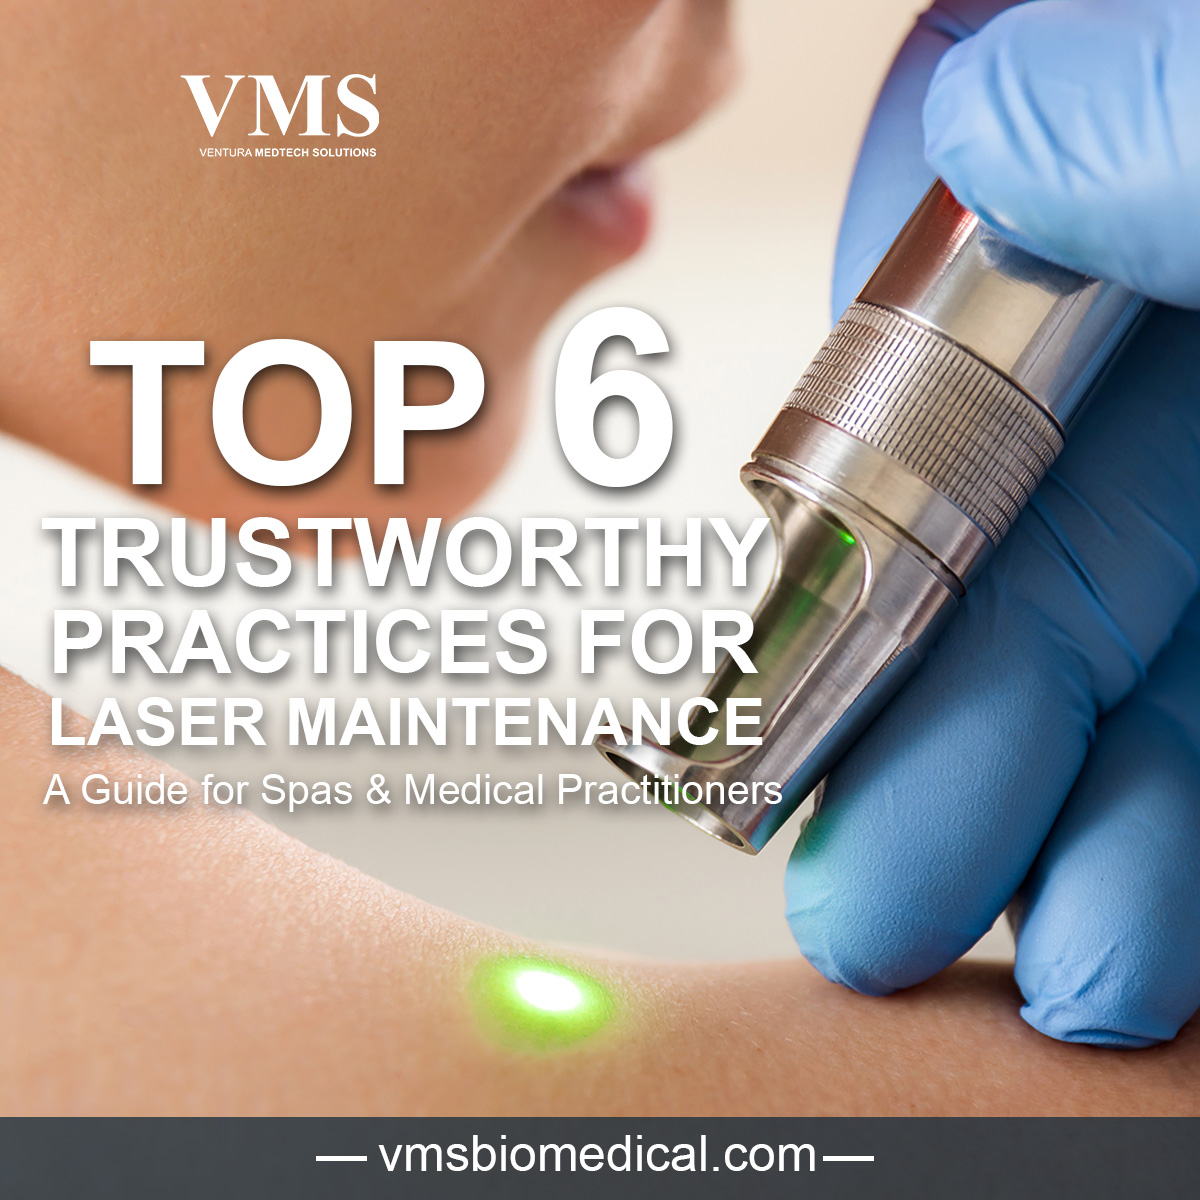 Image of medical professional utilizing laser equipment